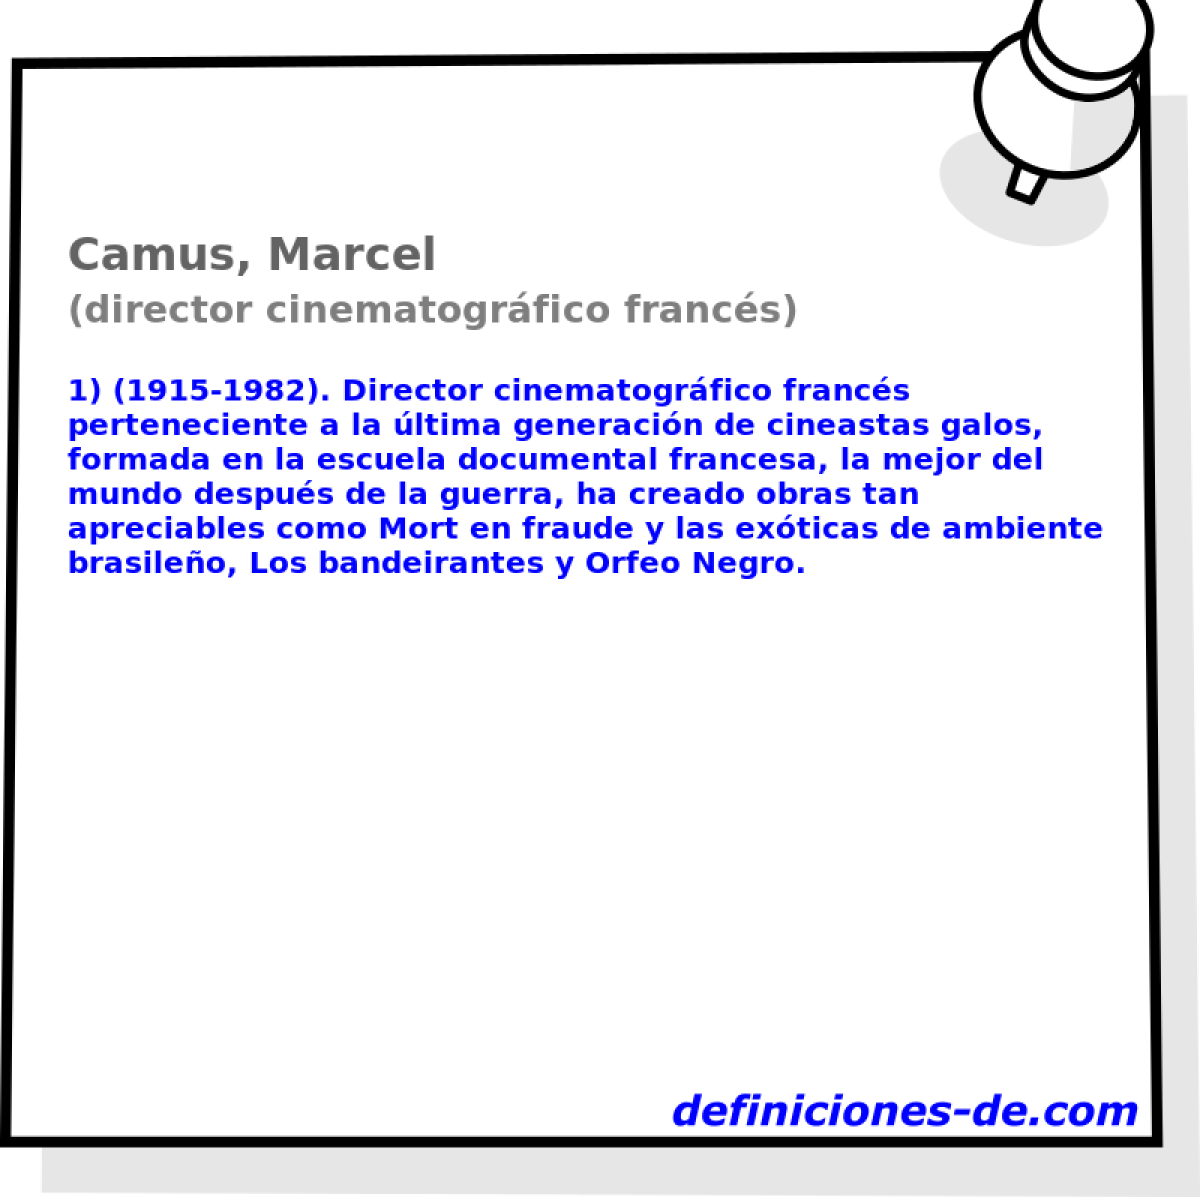 Camus, Marcel (director cinematogrfico francs)